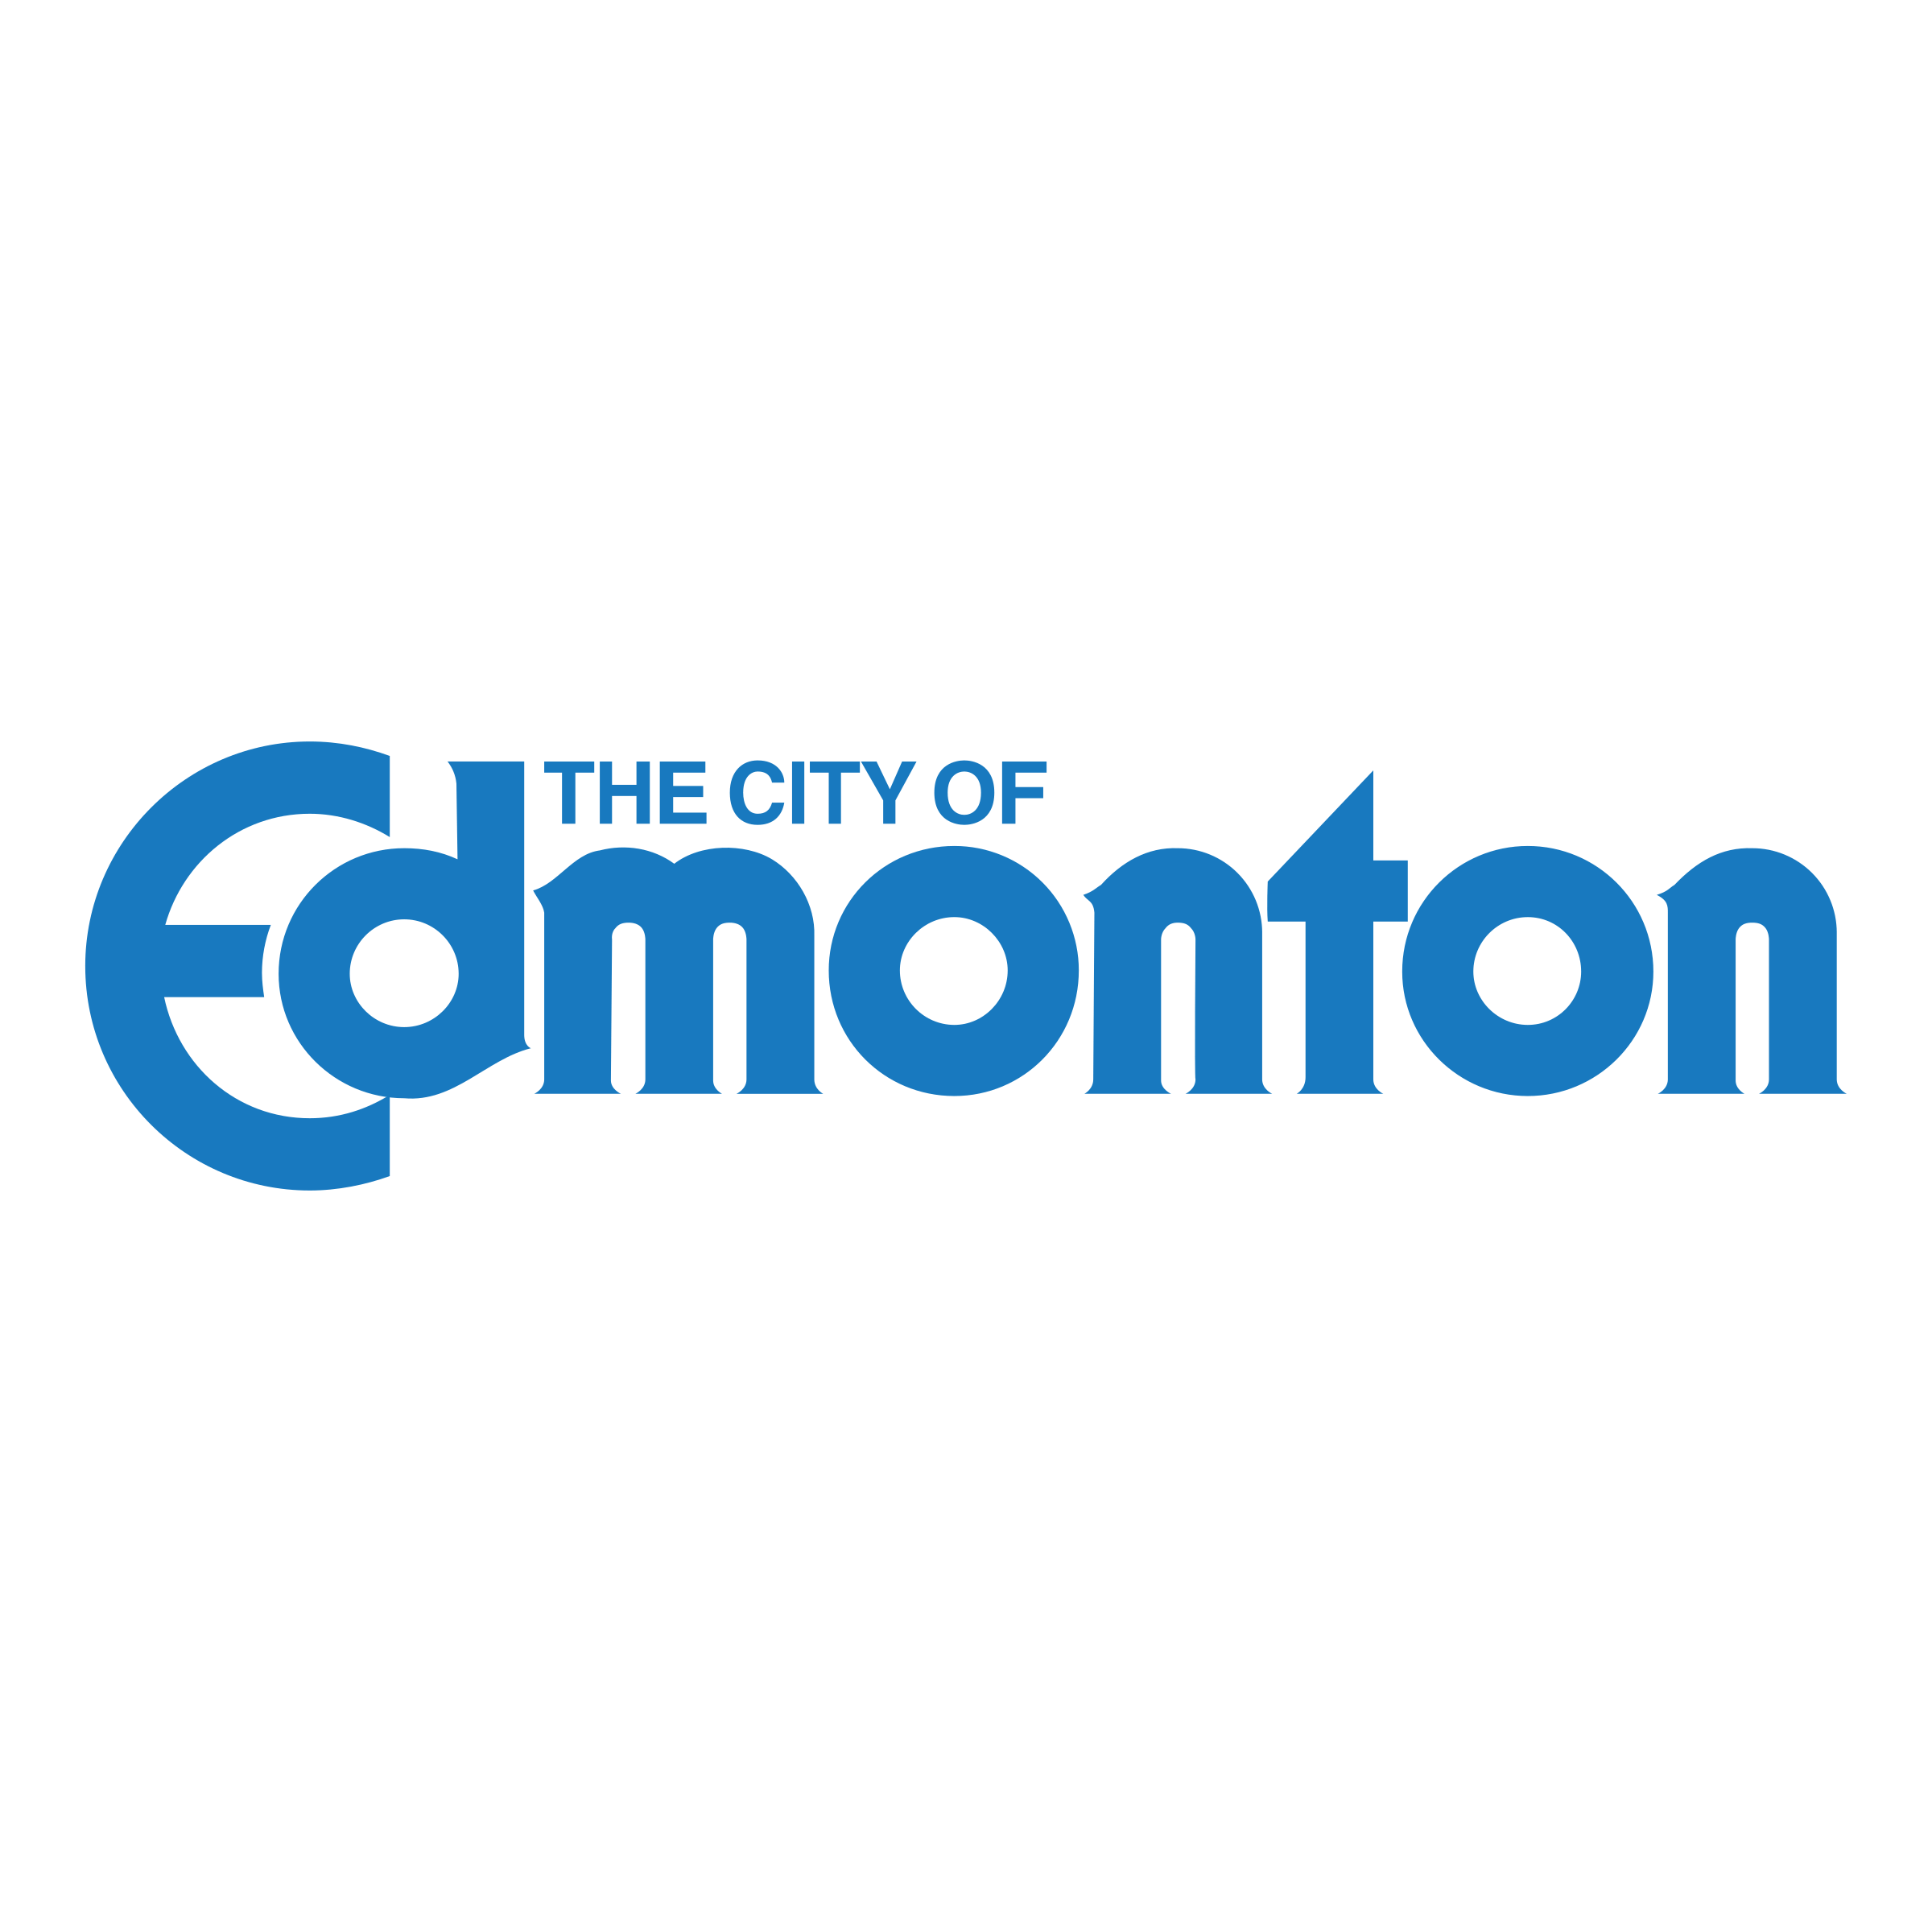 Edmonton Logo - Edmonton Logo PNG Transparent & SVG Vector - Freebie Supply